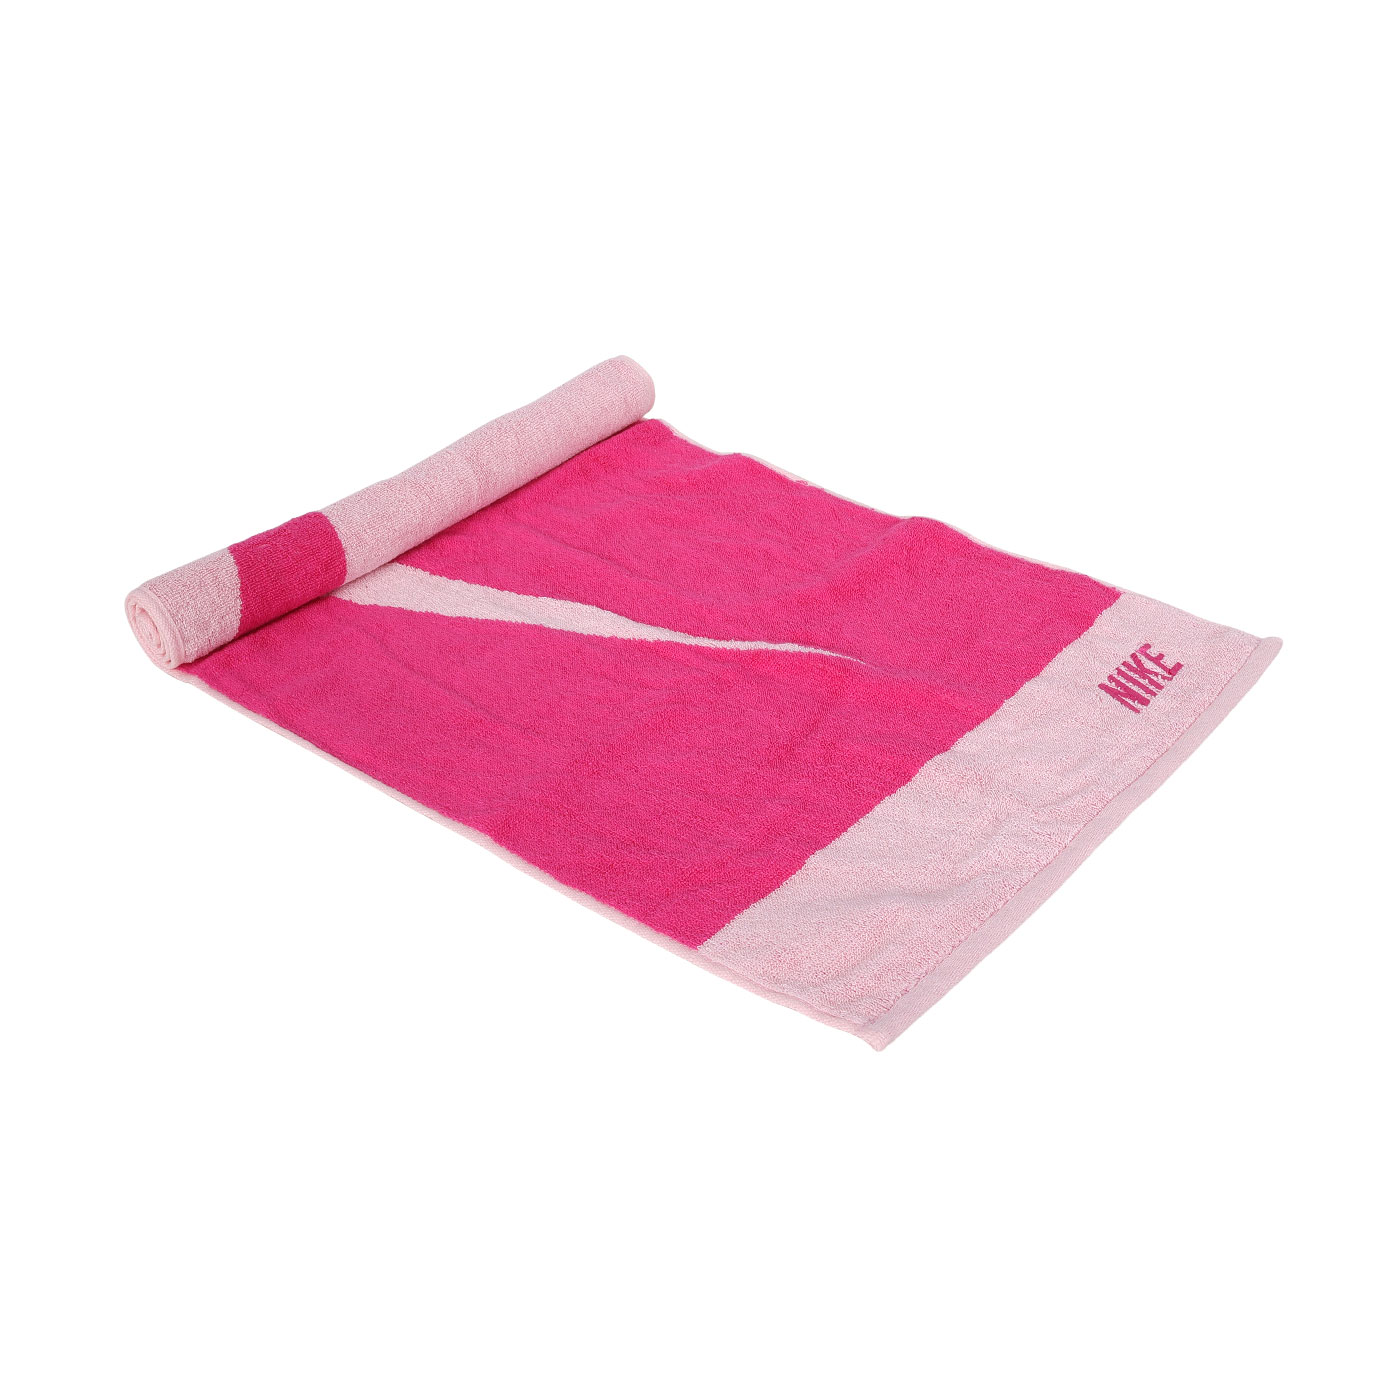 NIKE JACQUARD 毛巾(80x35cm)  N1001539664MD - 桃紅淡粉紅